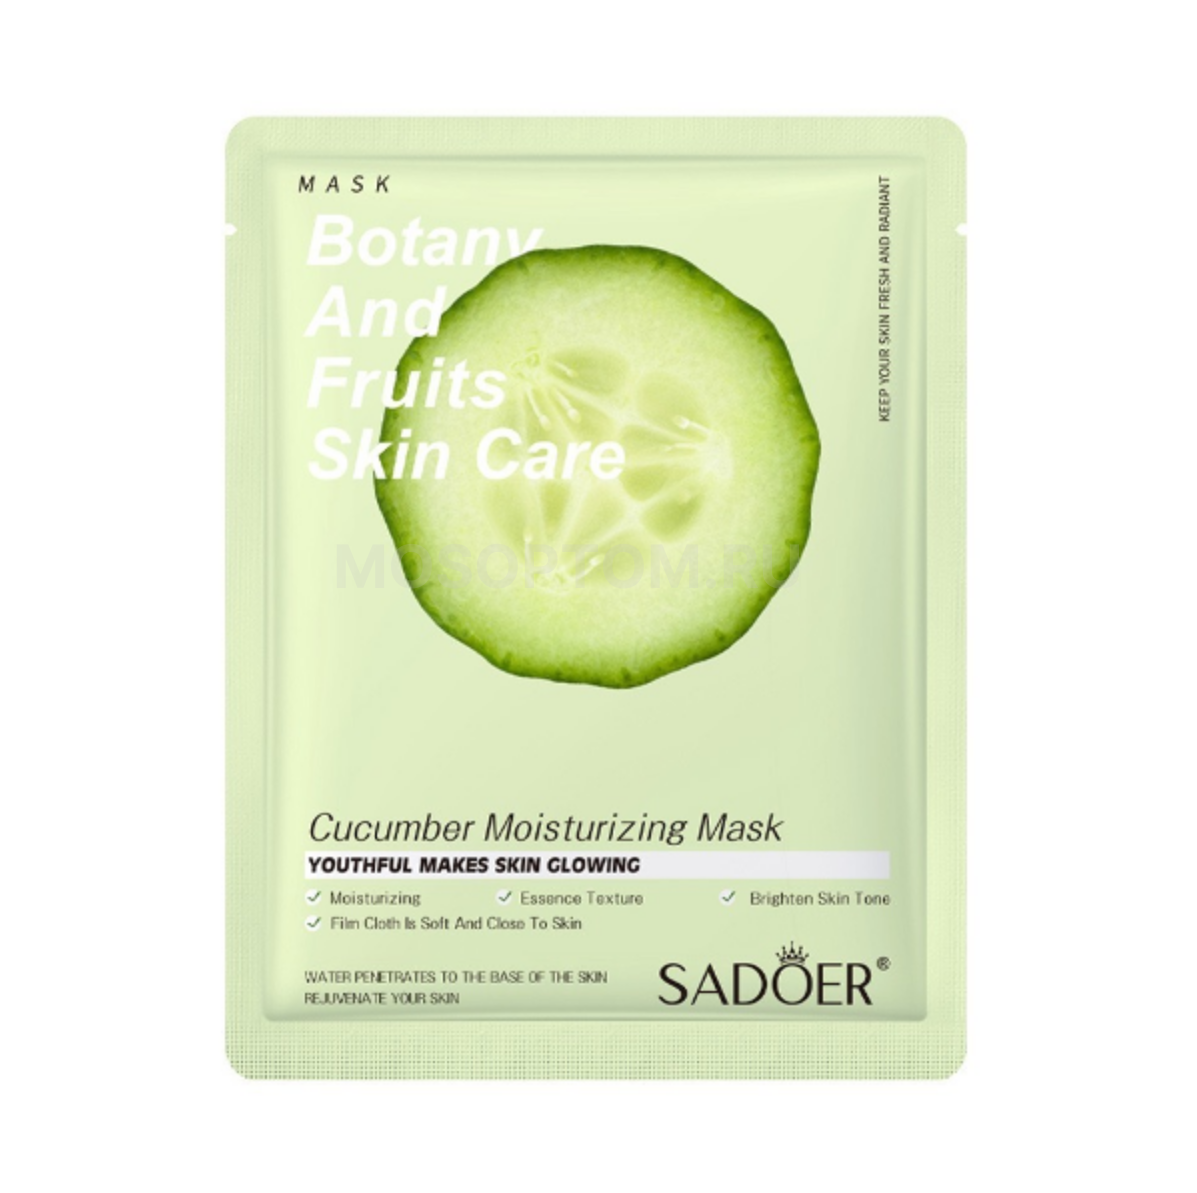 Тканевая маска для лица с экстрактом огурца Sadoer Botany And Fruits Skin Care Cucumber Moisturizing Mask 25мл оптом